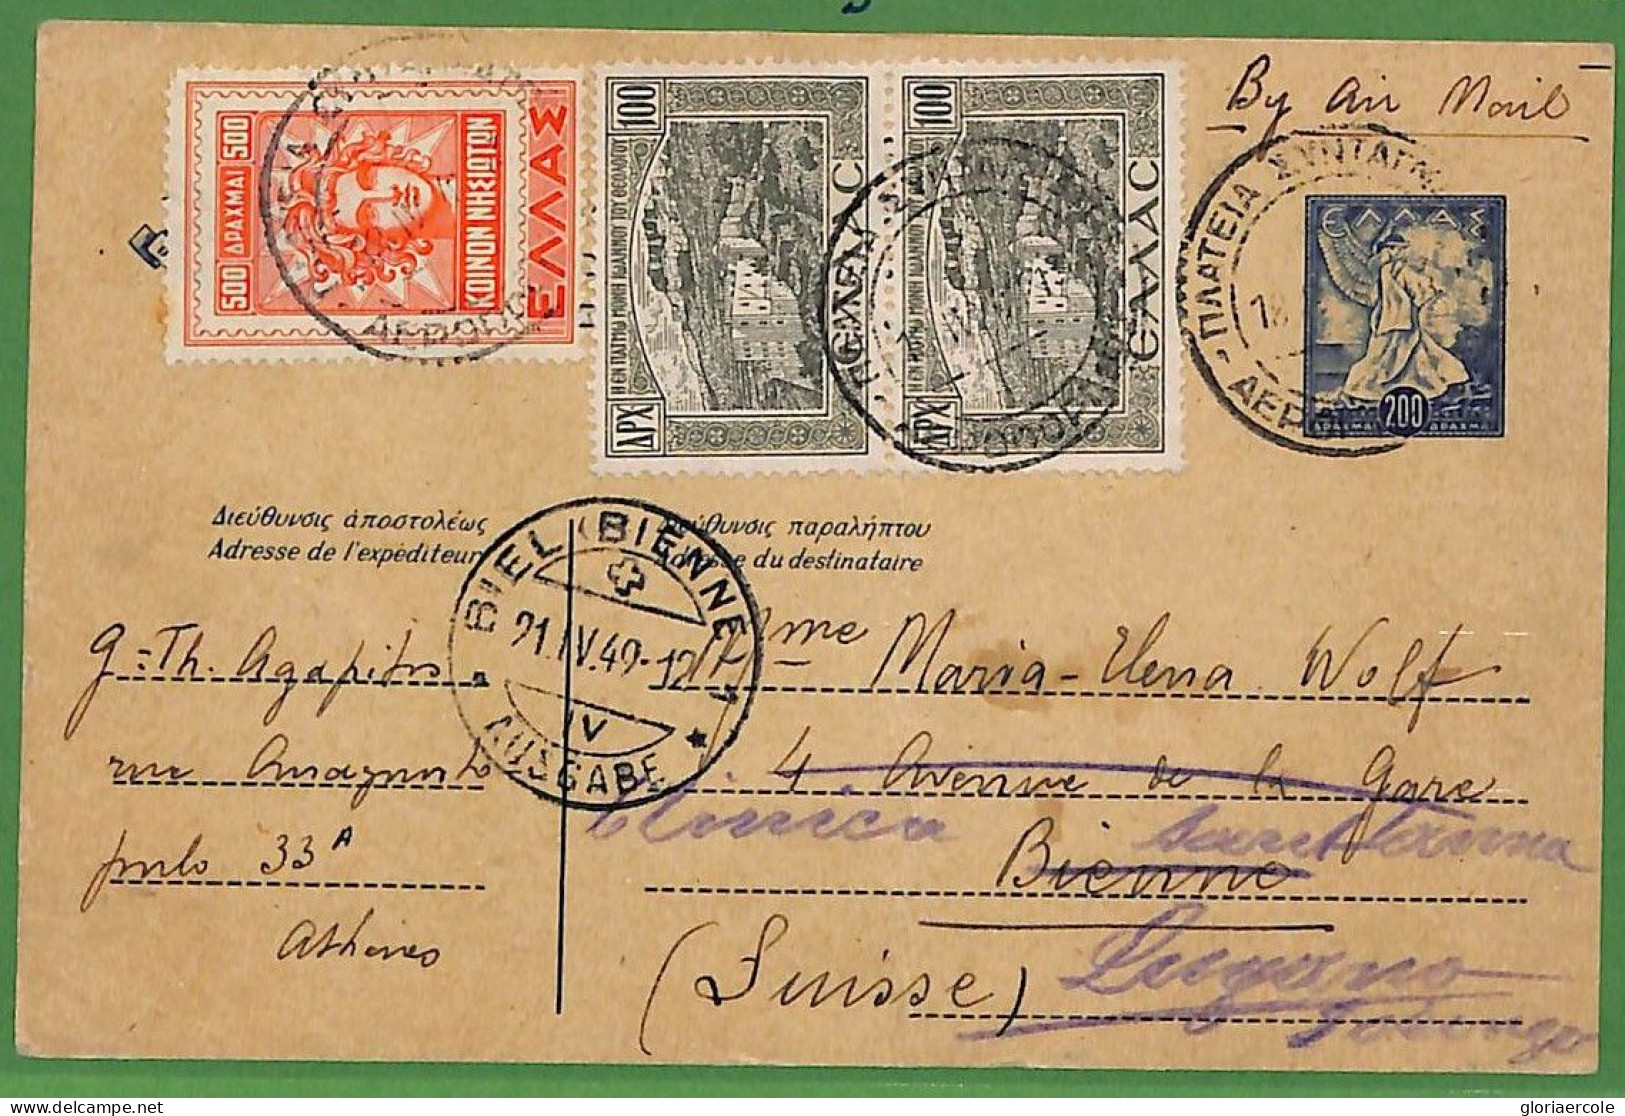 Ad0921 - GREECE - Postal History - Postal STATIONERY CARD Added Franking  To SWITZERLAND 1949 - Enteros Postales